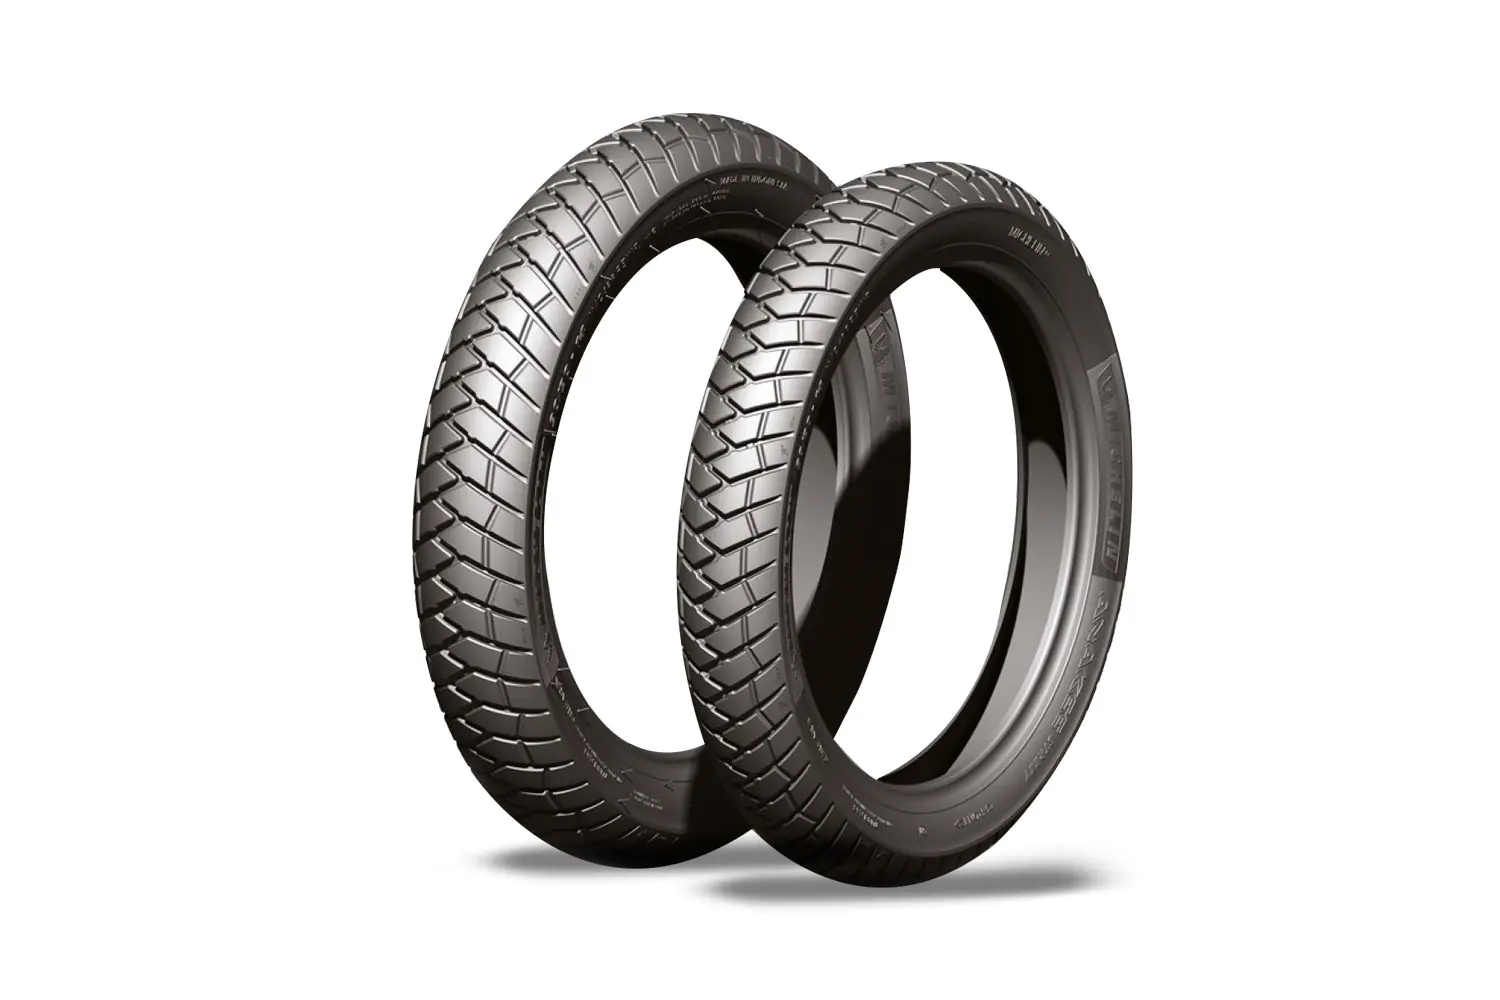 Michelin Michelin 110/80-14 53P Anakeestreet pneumatici nuovi Estivo 